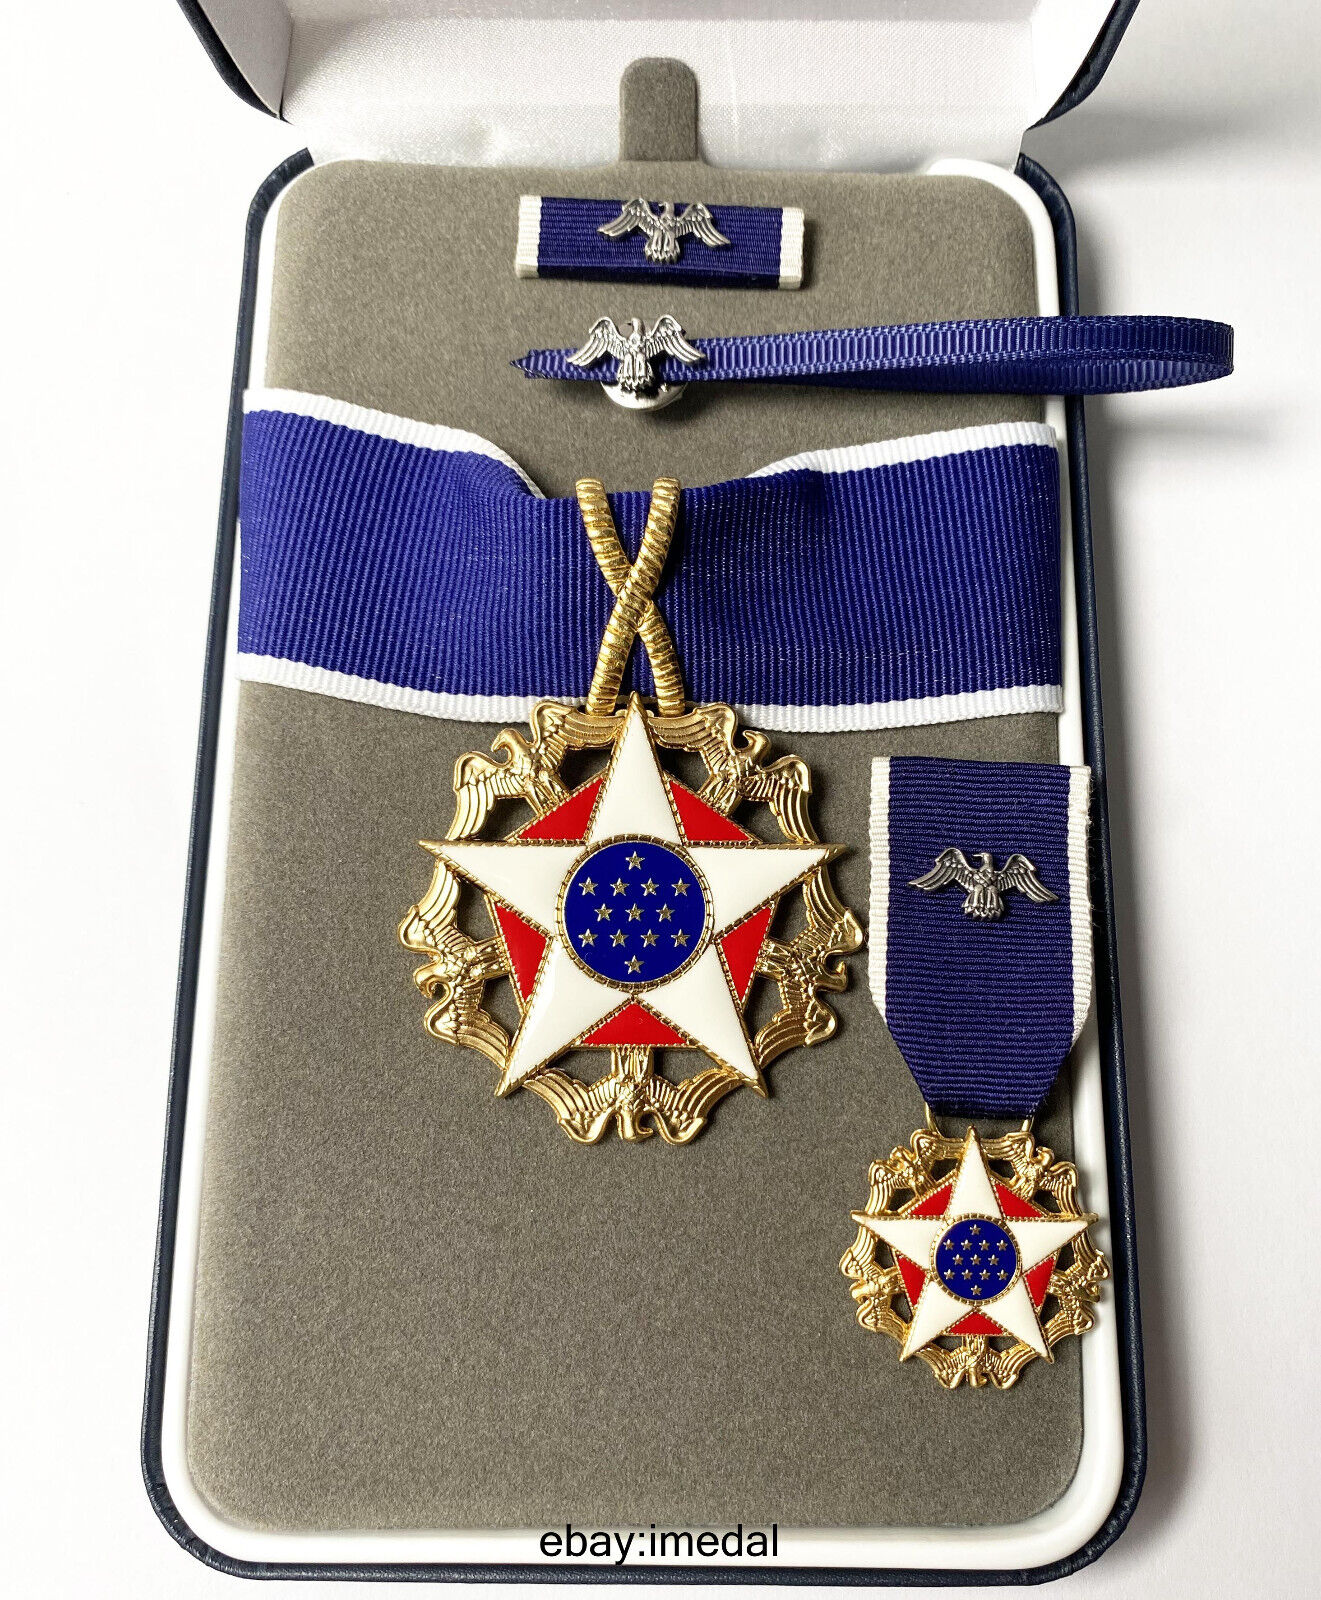 U.S. USA Presidential Medal of Freedom full Set mini medal Lapel pin ribbon bar